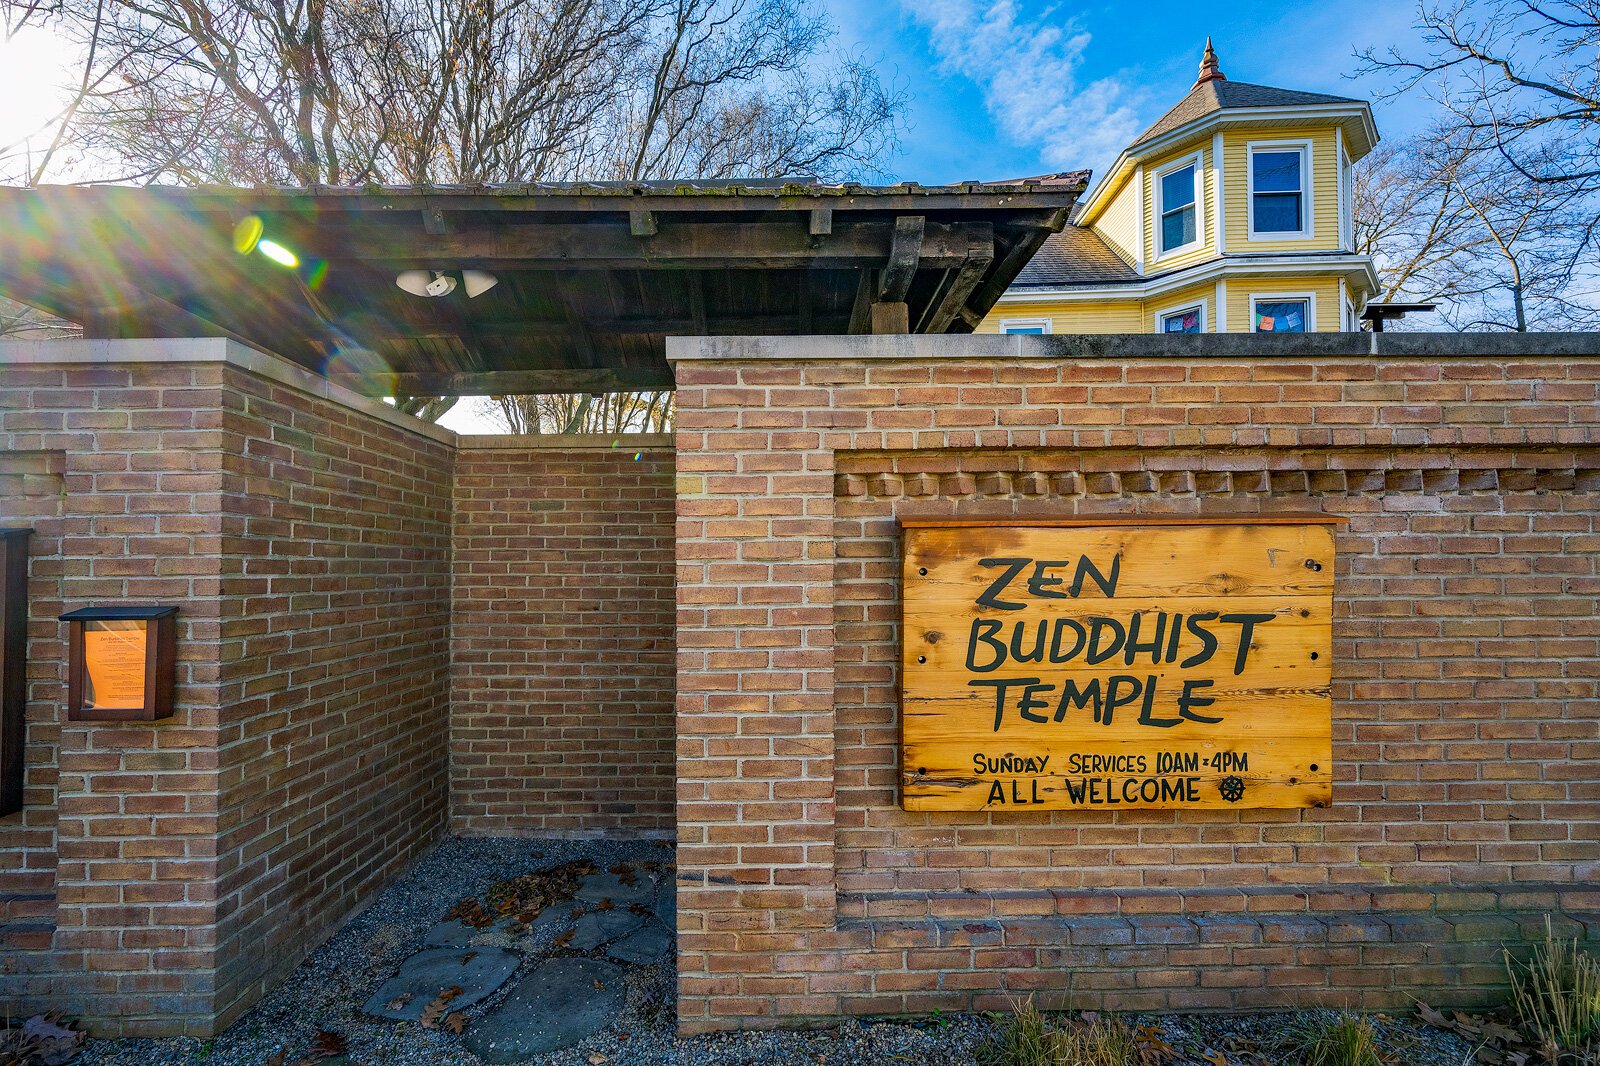 The Zen Buddhist Temple in Ann Arbor.